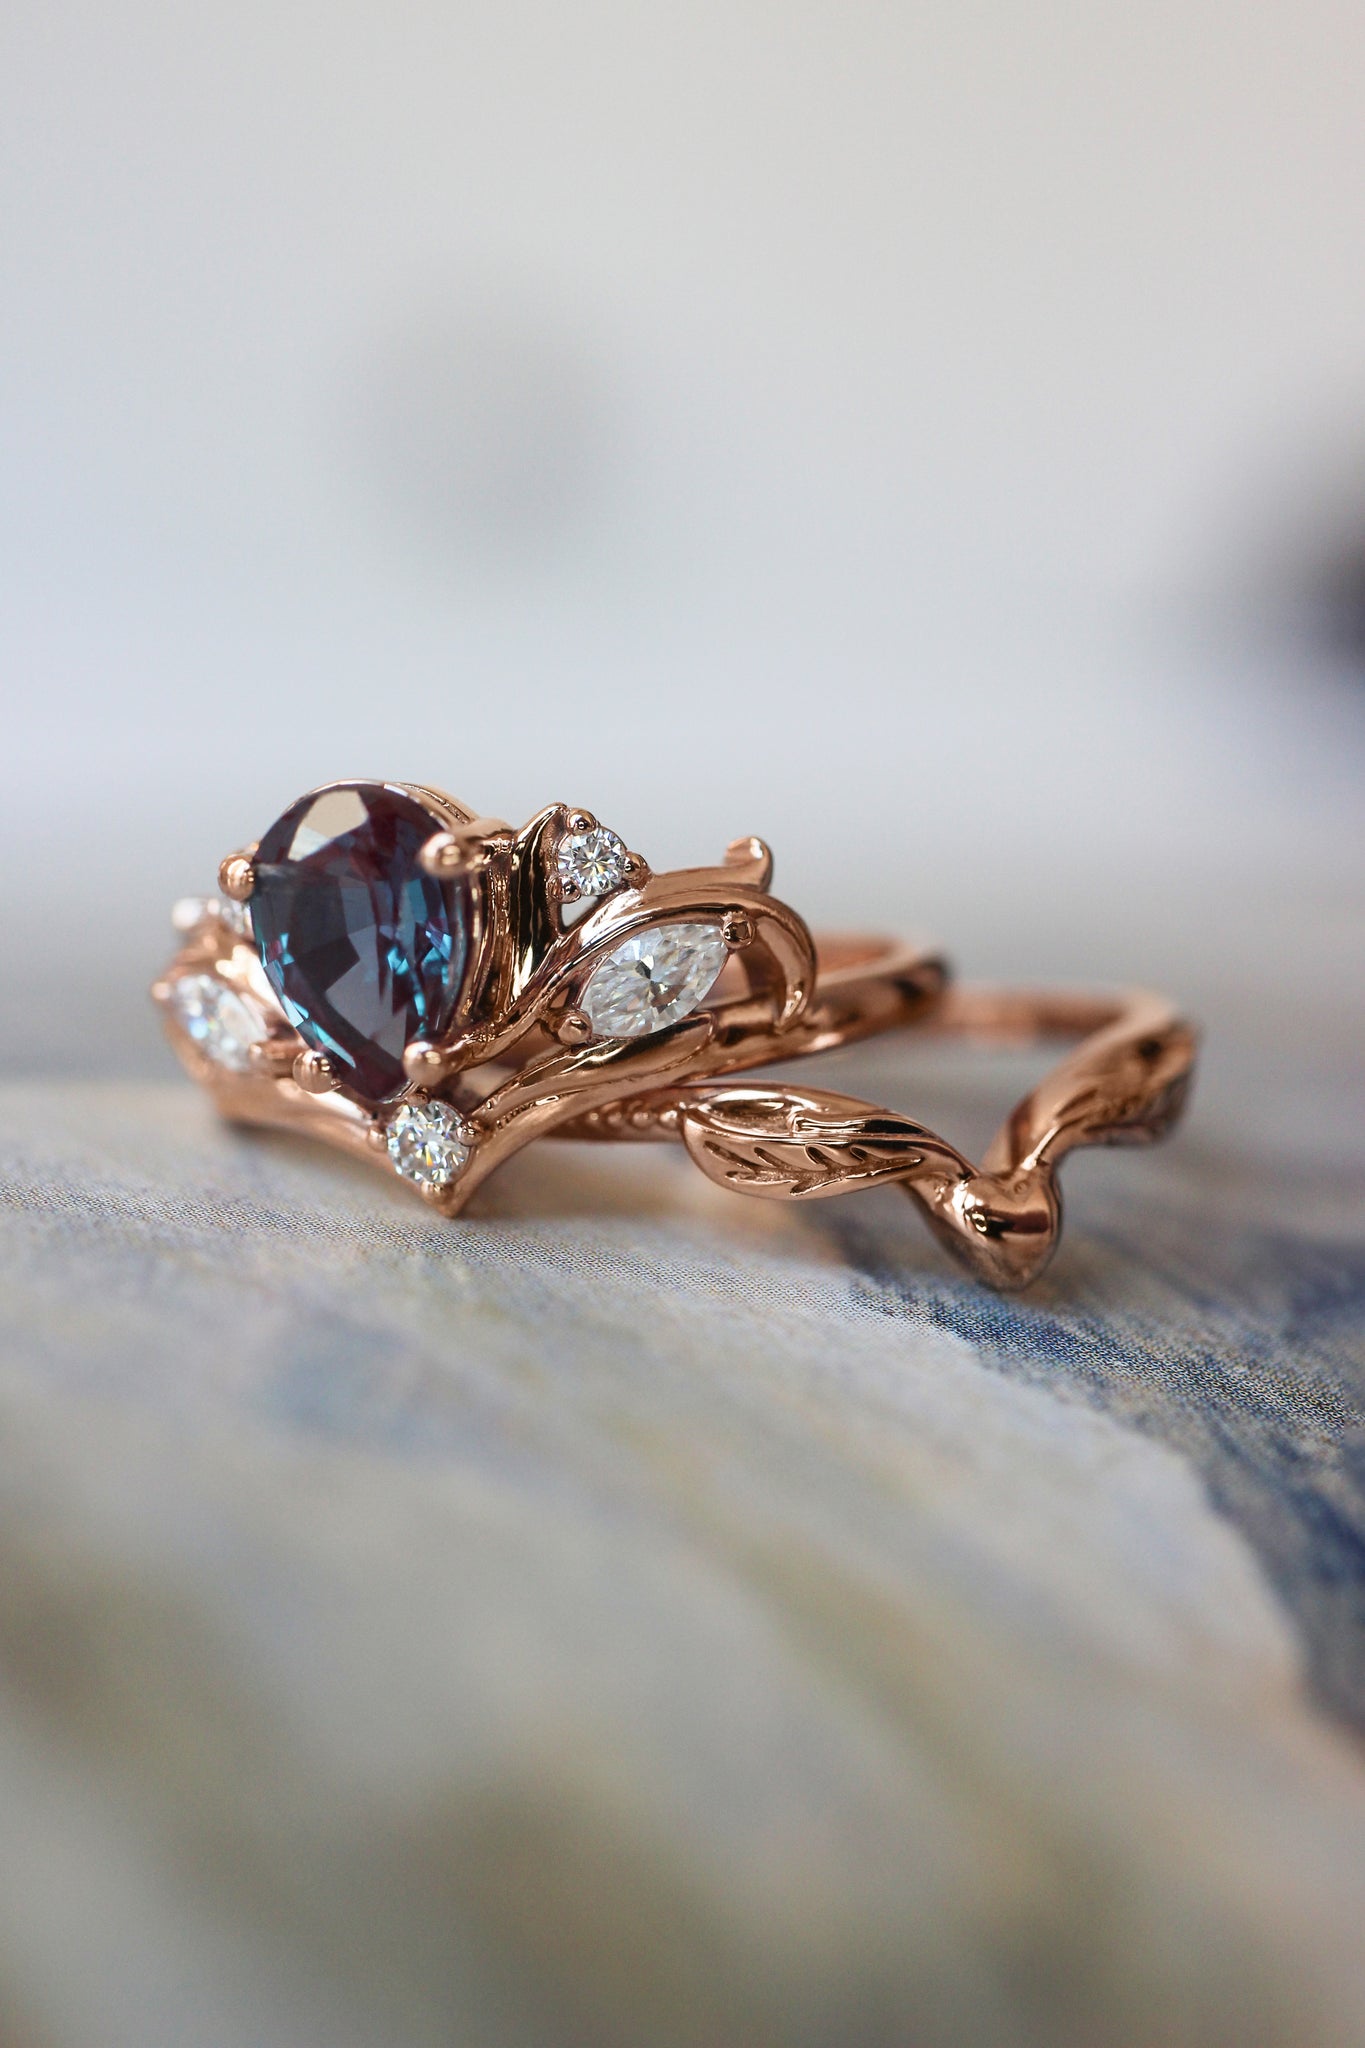 Swanlake | engagement ring setting for pear cut gemstone - Eden Garden Jewelry™